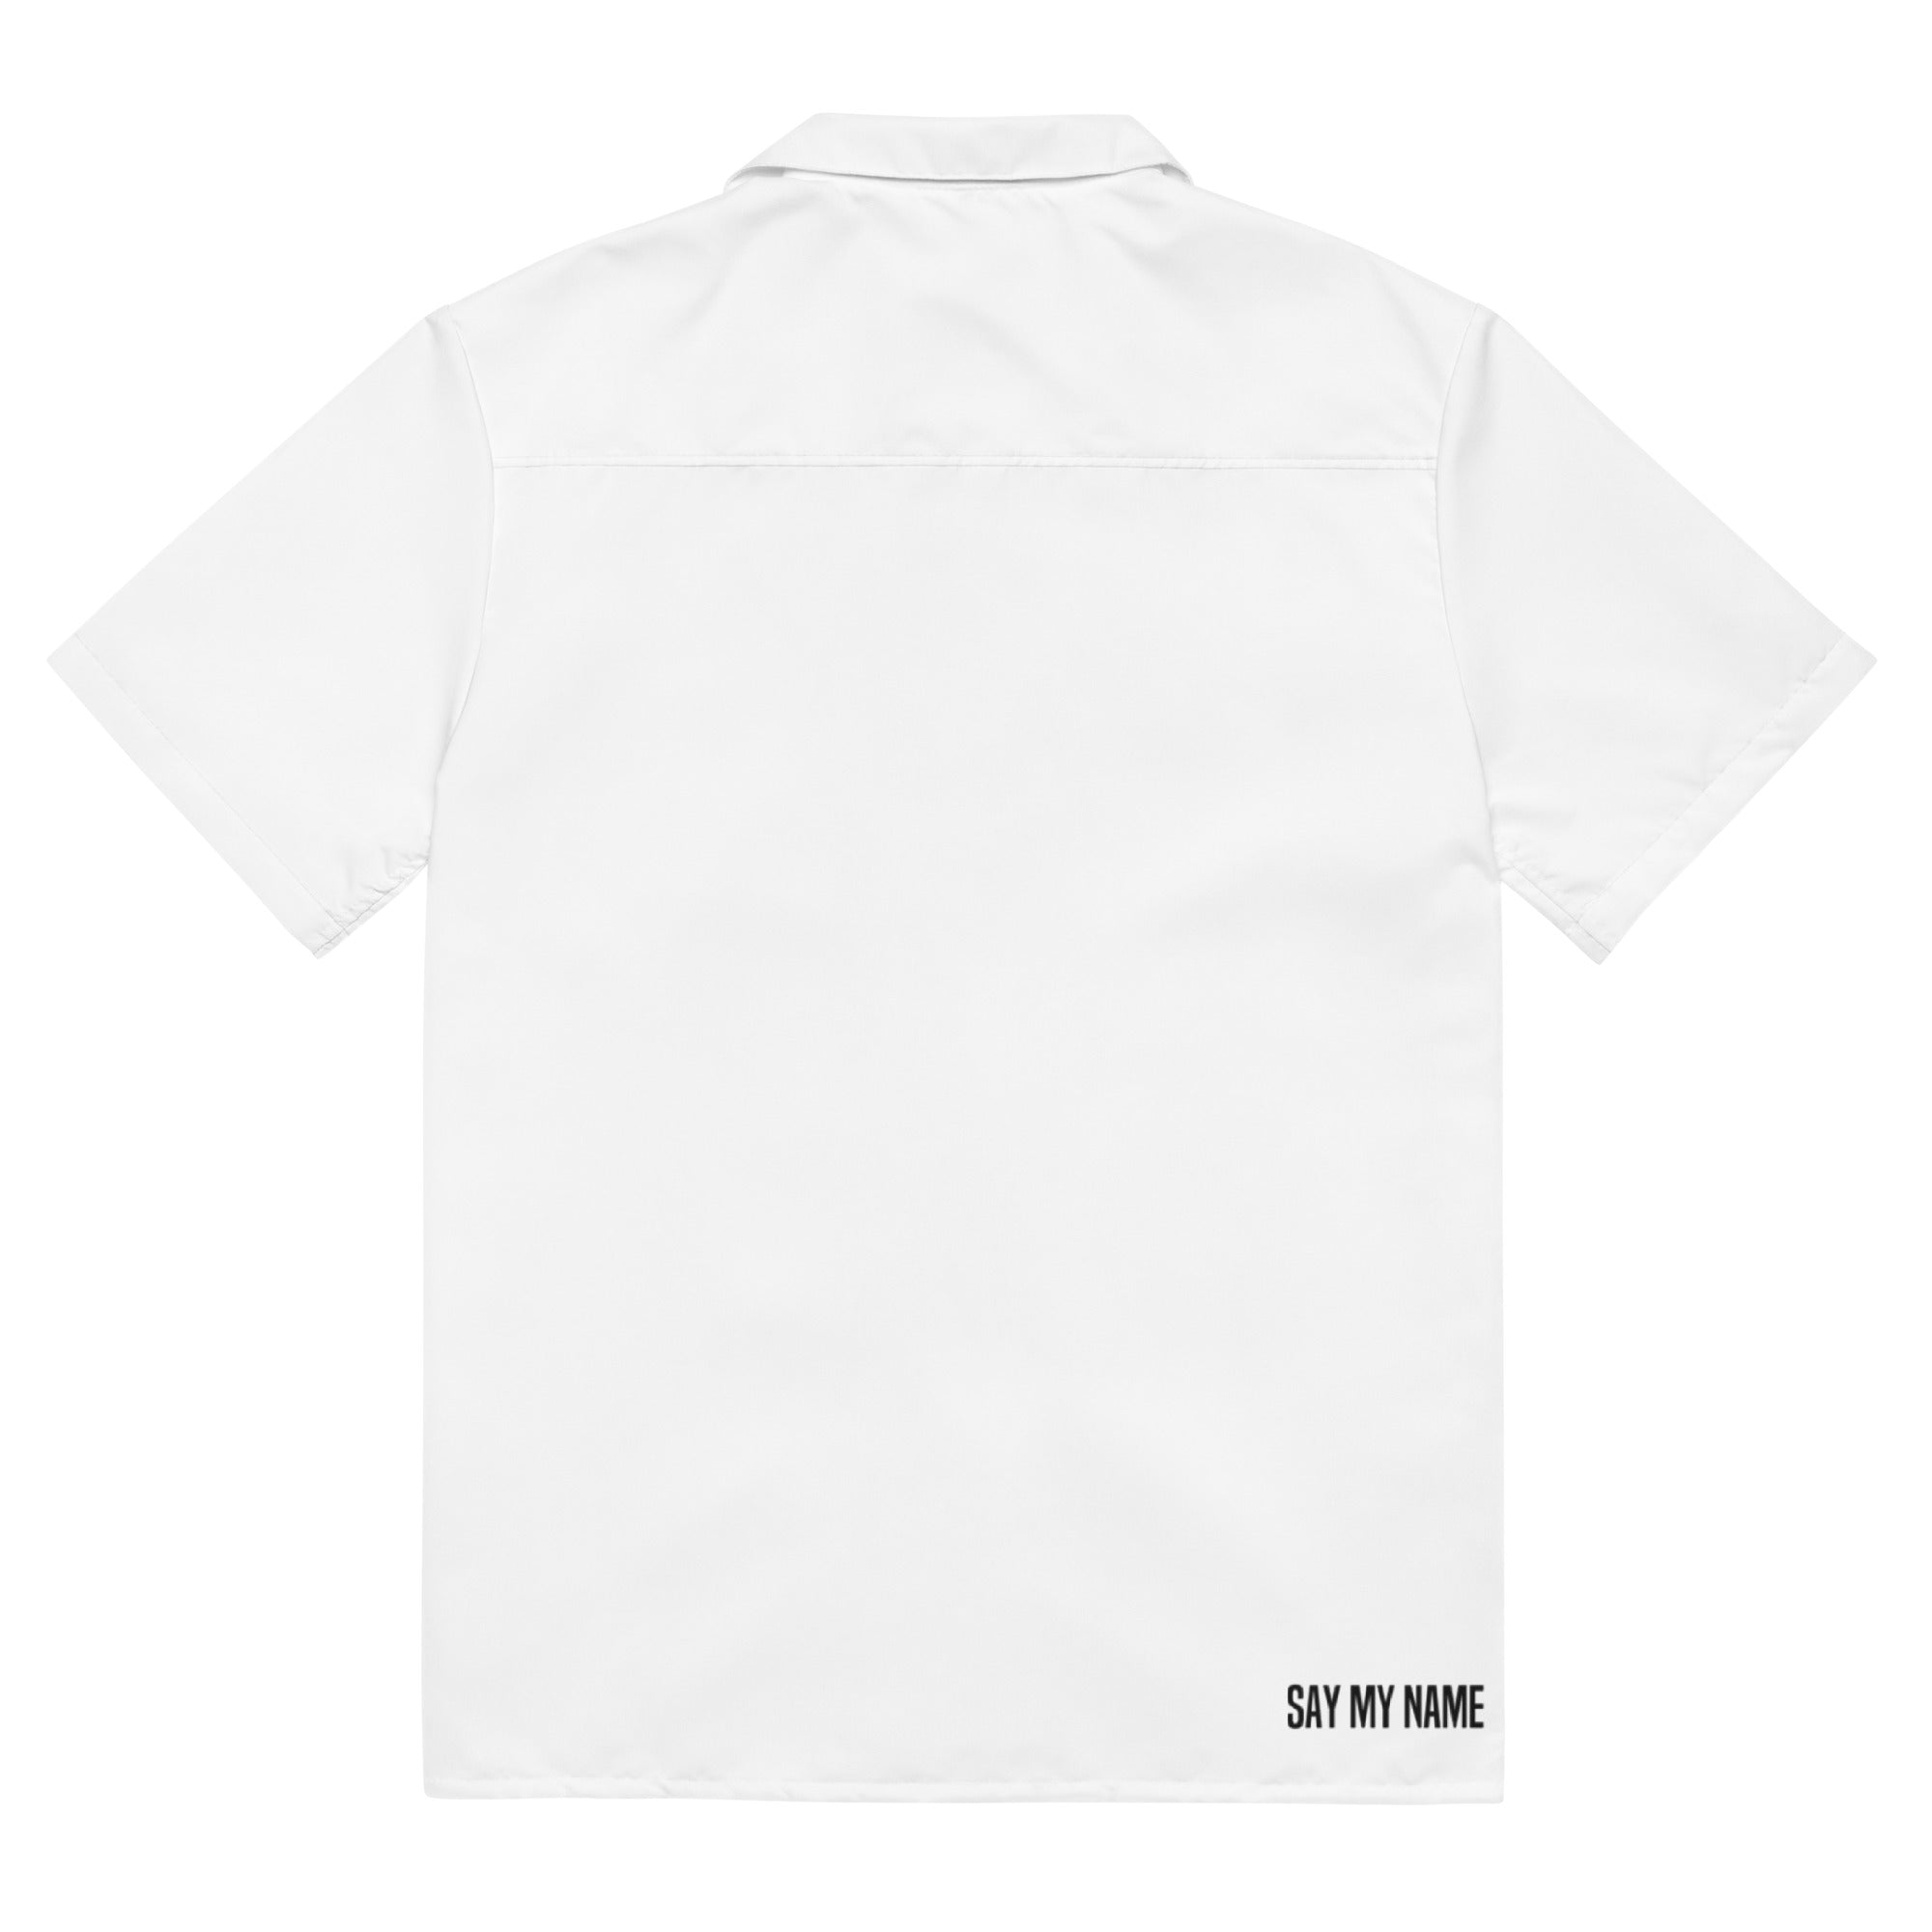 CSG unisex overhemd met knopen "SAY MY NAME"